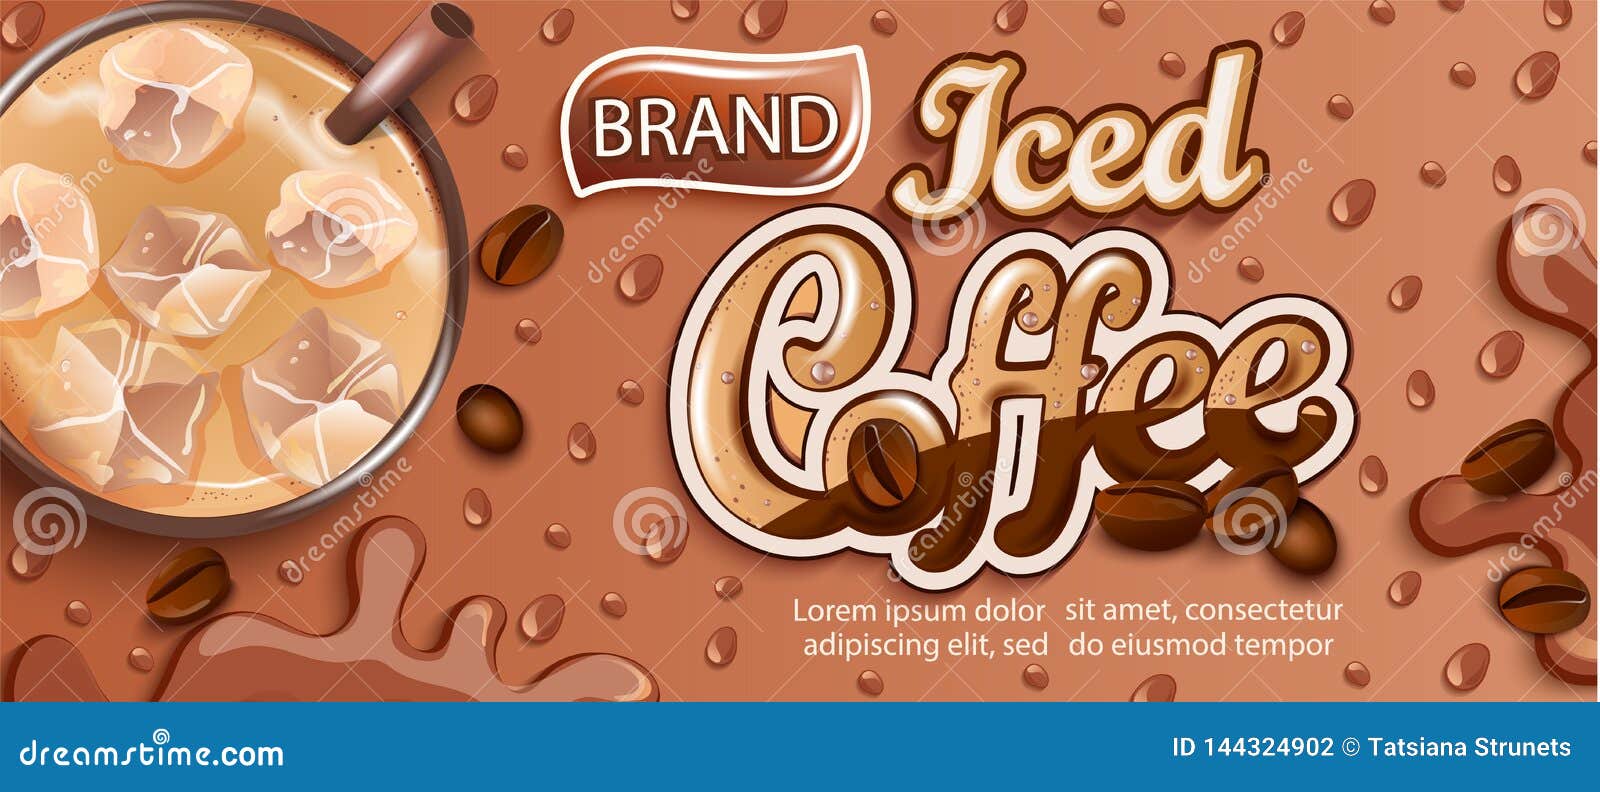 https://thumbs.dreamstime.com/z/iced-coffee-banner-ice-apteitic-drops-splashing-drink-cubes-cinnamon-beans-brand-logo-template-label-emblem-store-144324902.jpg